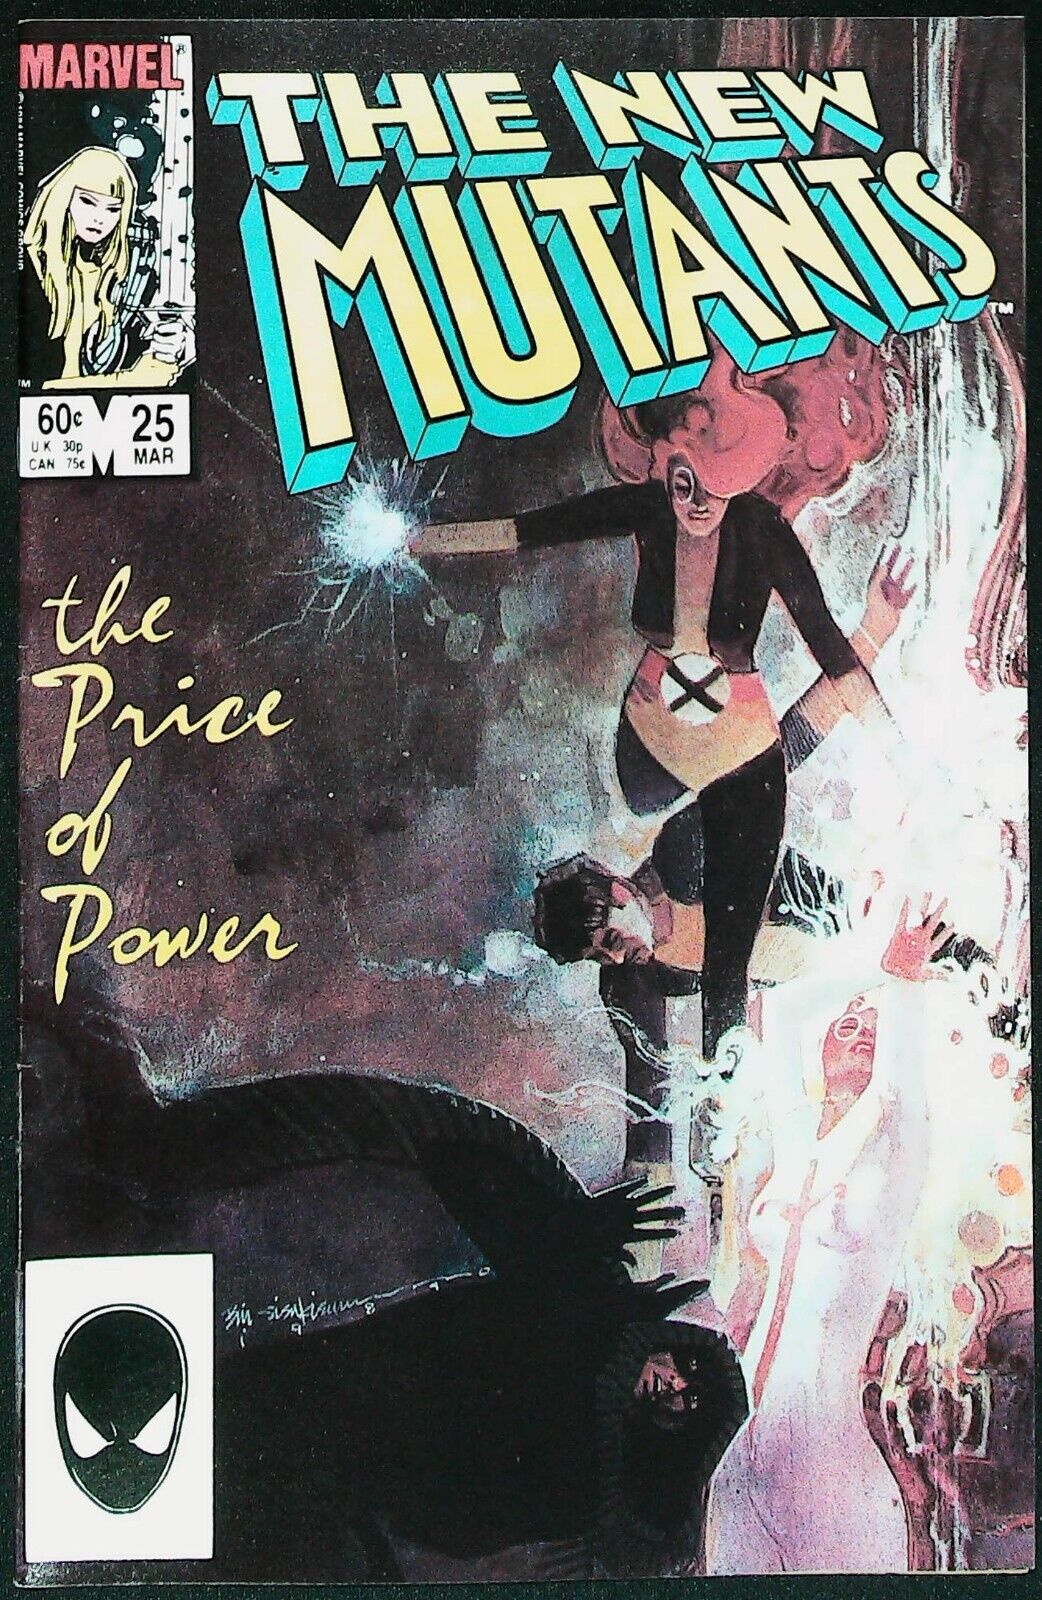 The New Mutants #25 Vol 1 (1985) KEY *1st Appearance of Legion* - High Grade